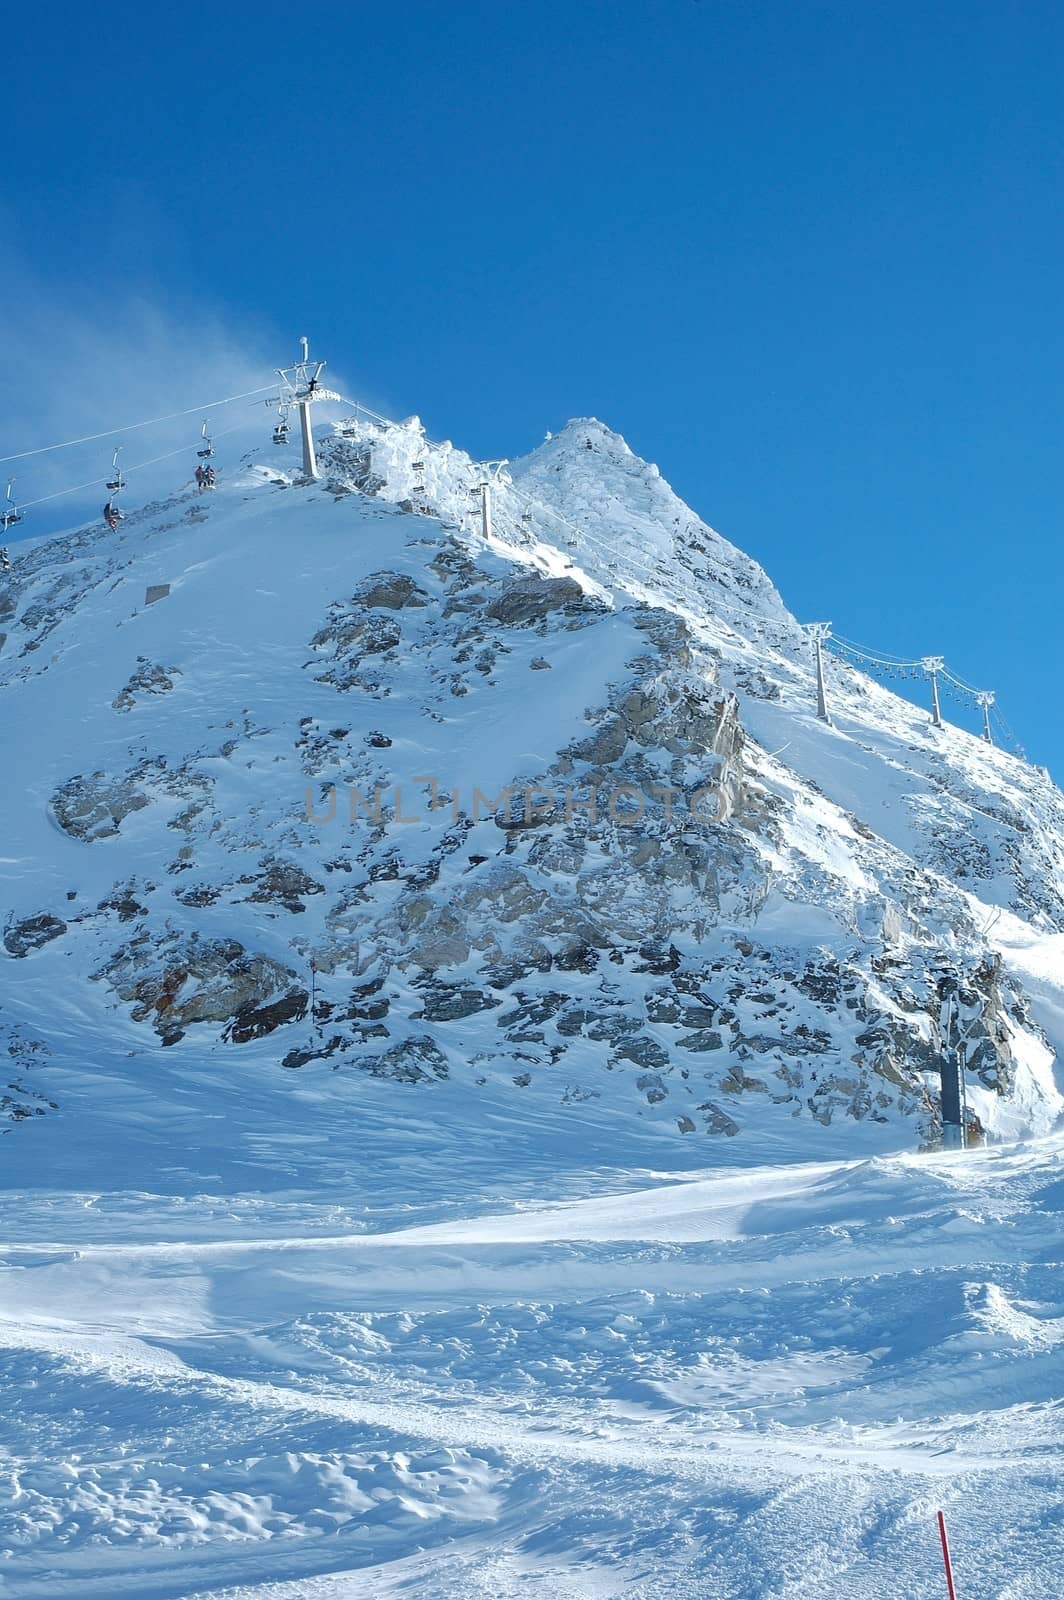 Peak and ski lift by janhetman